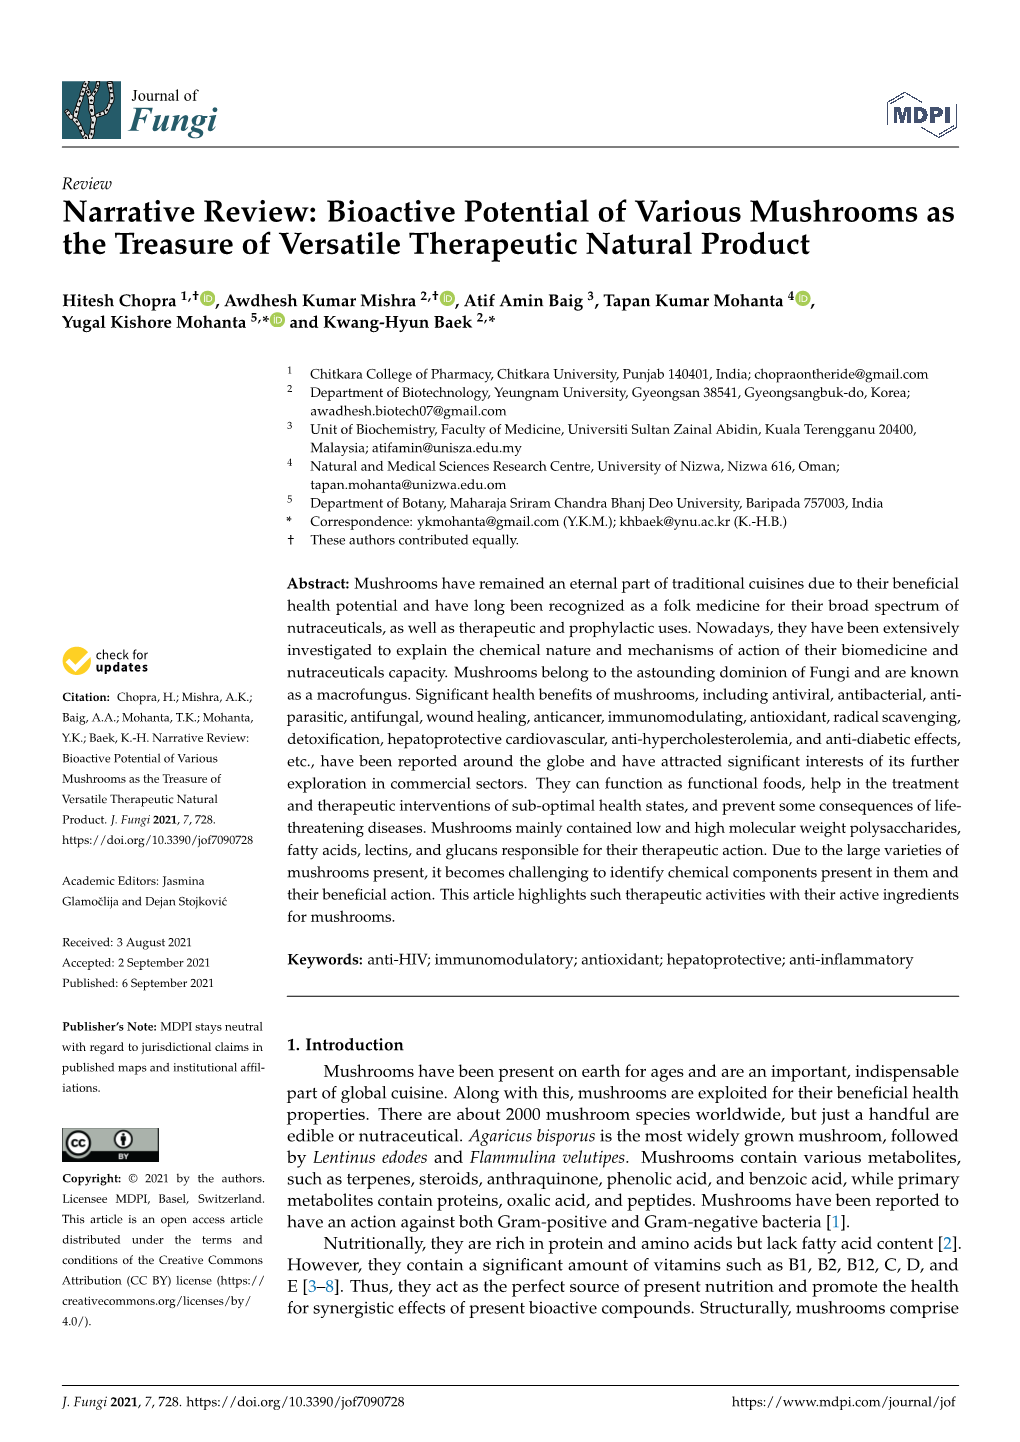 Narrative Review: Bioactive Potential of Various Mushrooms As the Treasure of Versatile Therapeutic Natural Product